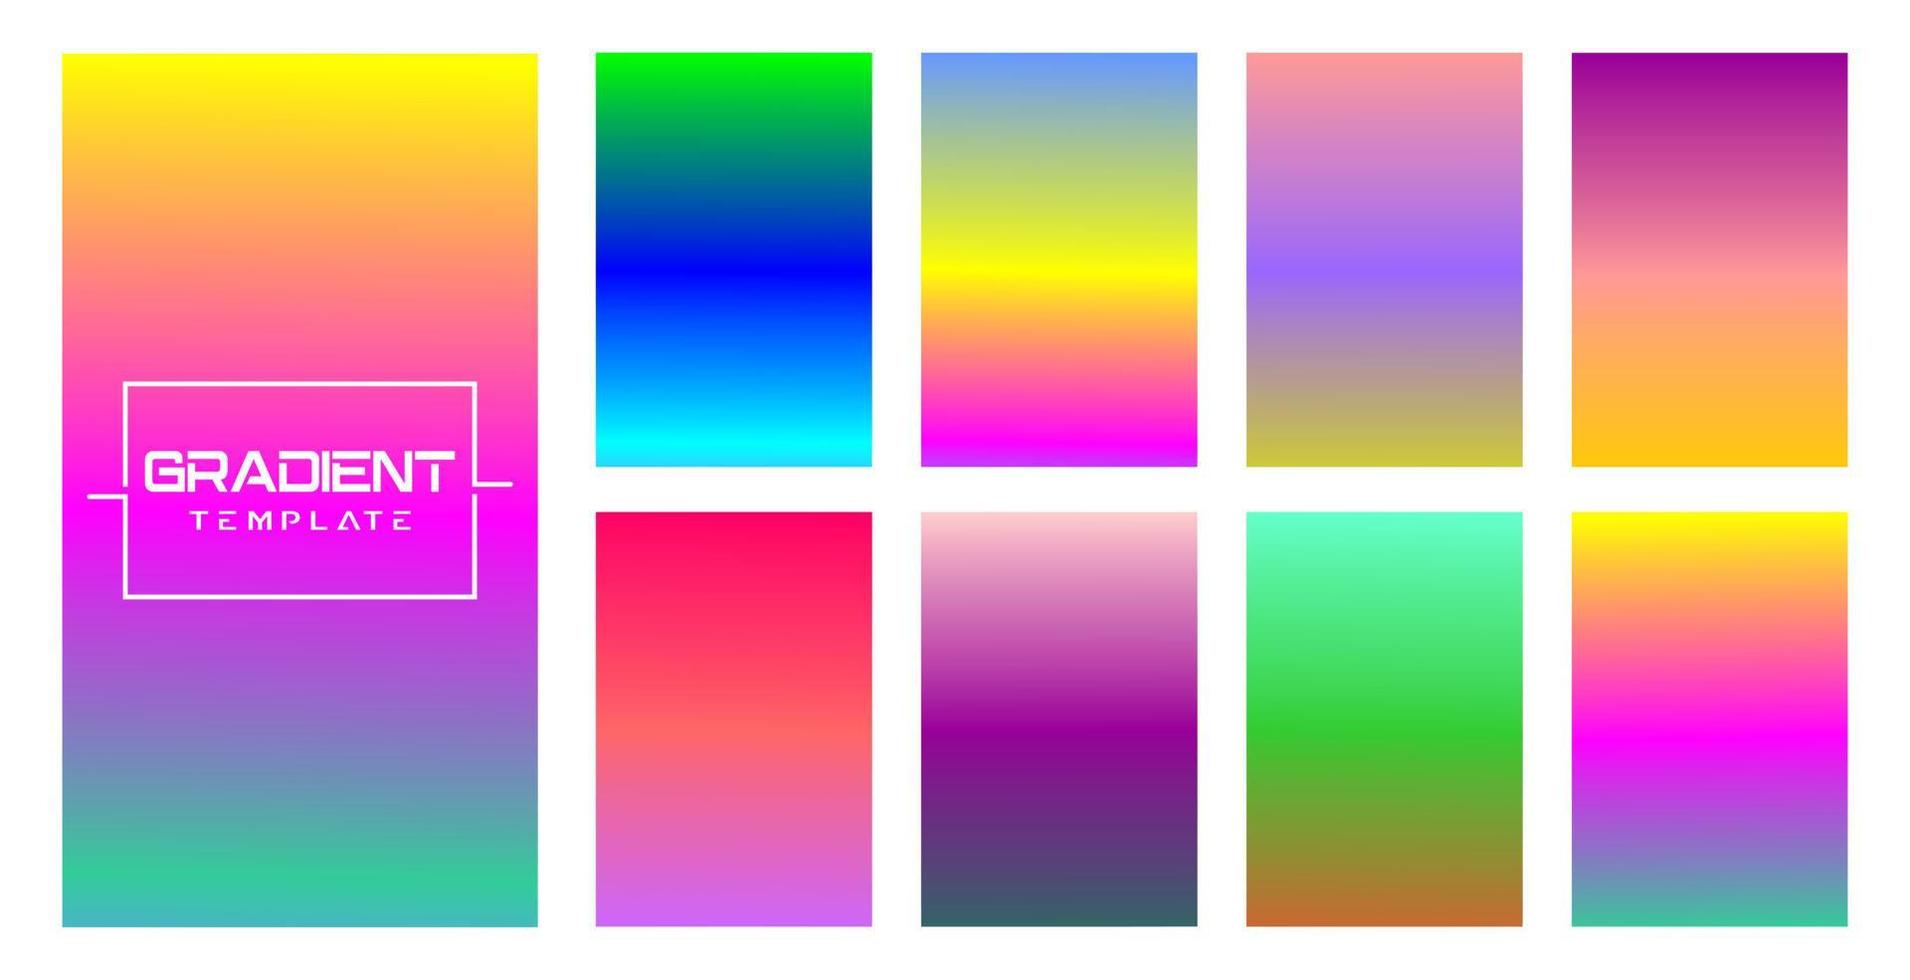 Minimal cover design. colorful halftones. Modern background template design for web. vector illustration